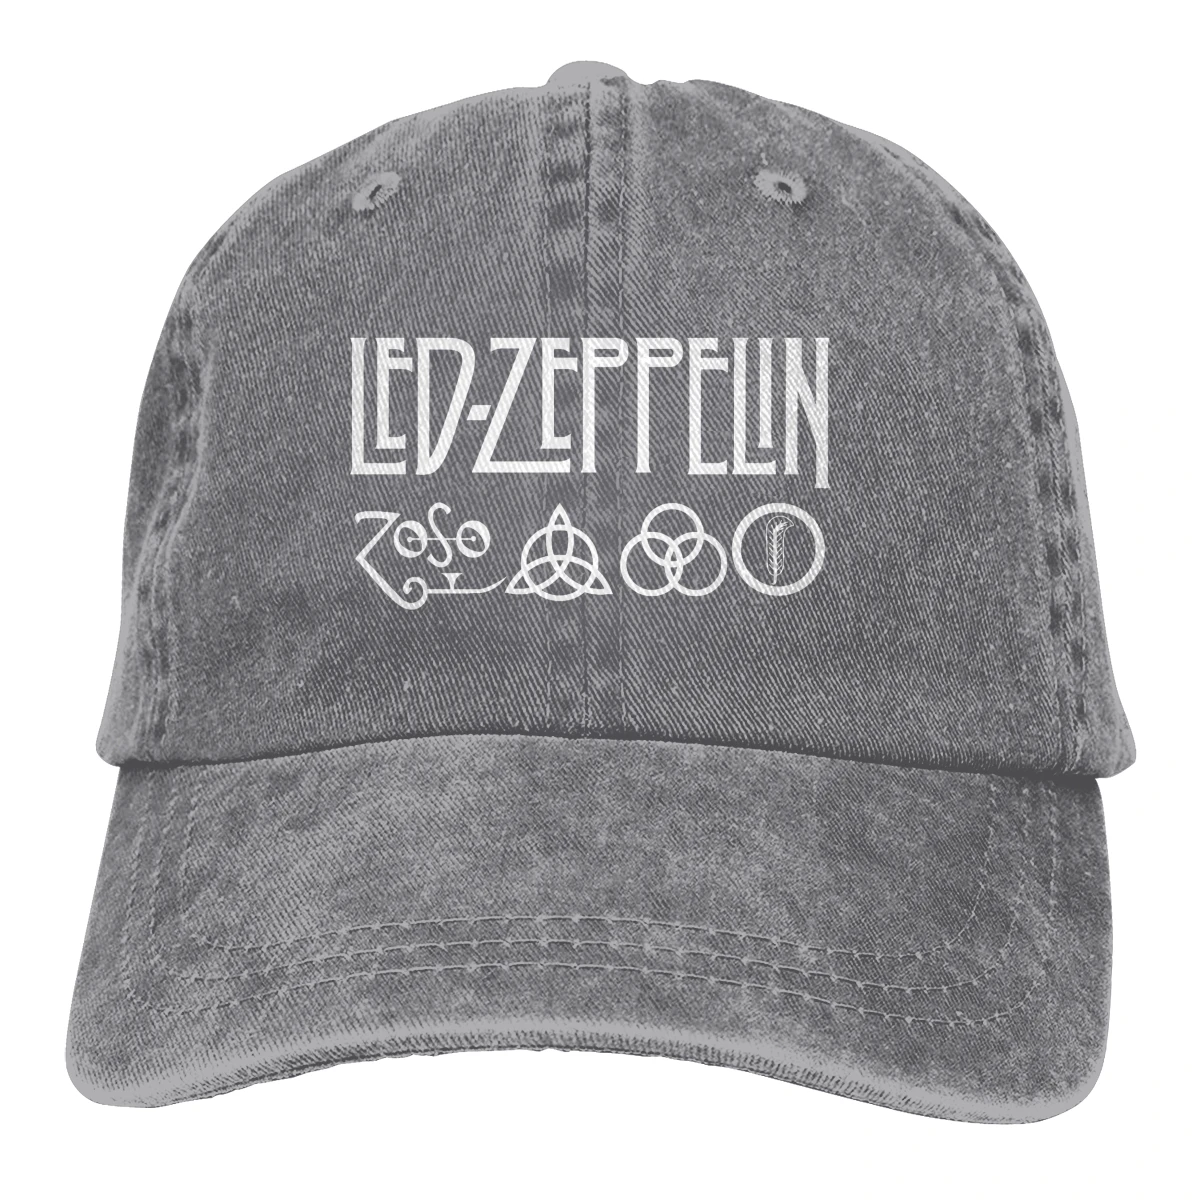 Led-Zeppelin Casquette, Черная мужская и женская джинсовая бейсболка, регулируемая бейсболка для гольфа